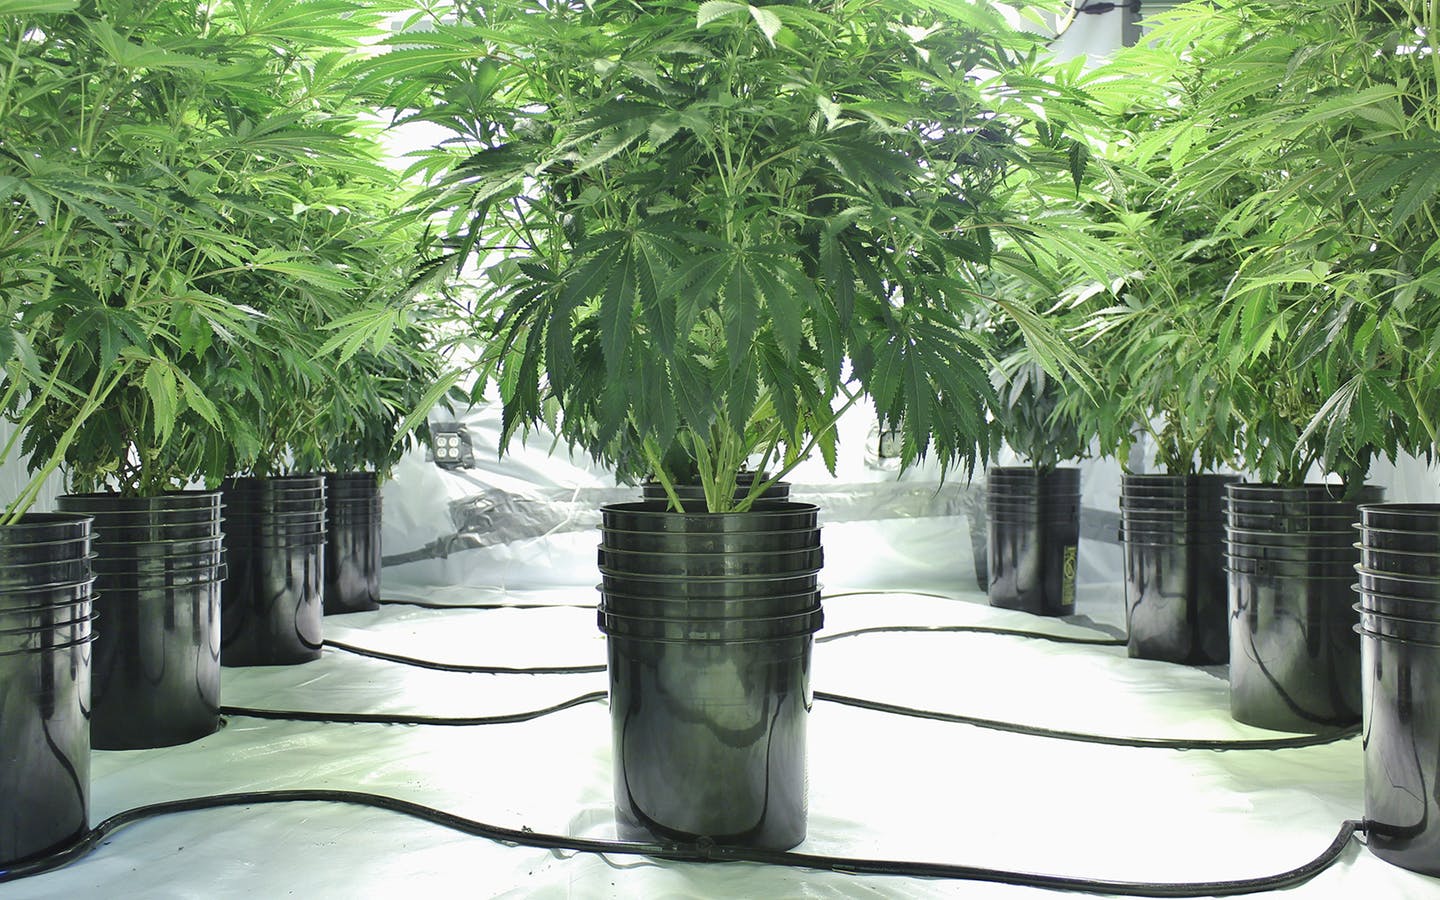 A series of potted marijuana plants. Photo: Rick Thompson
